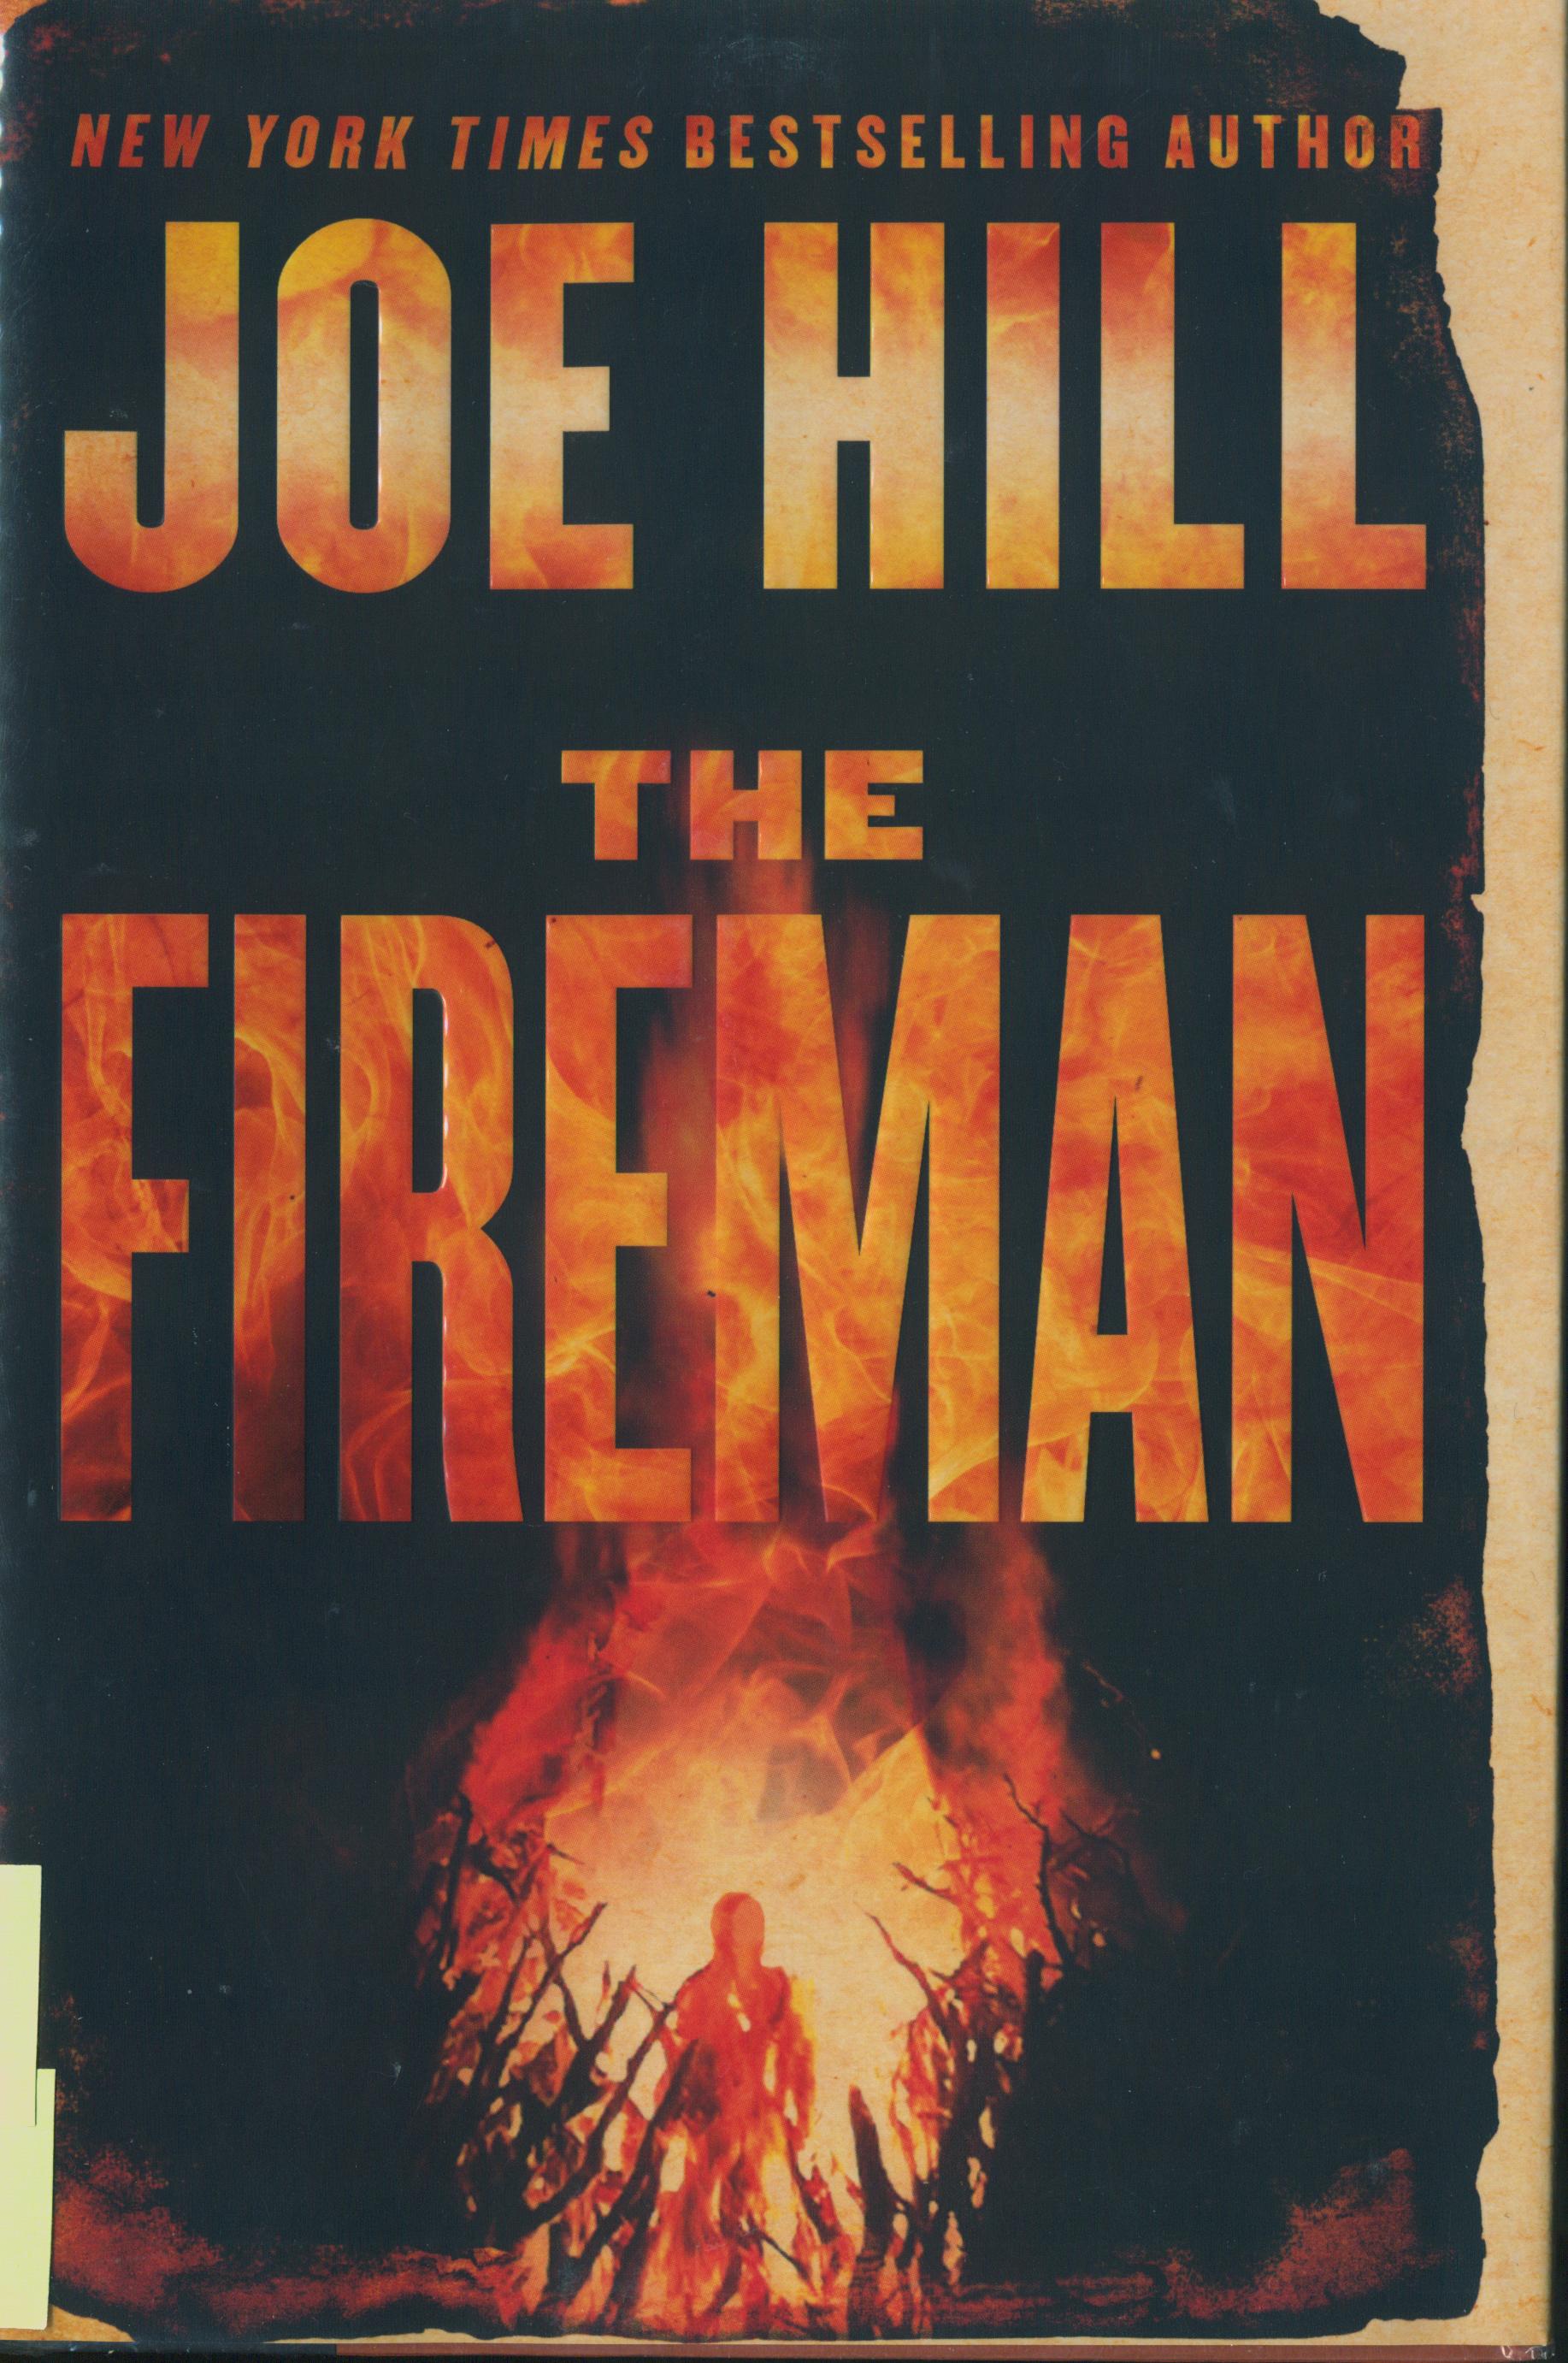 The cover of Joe Hill's novel The Fireman